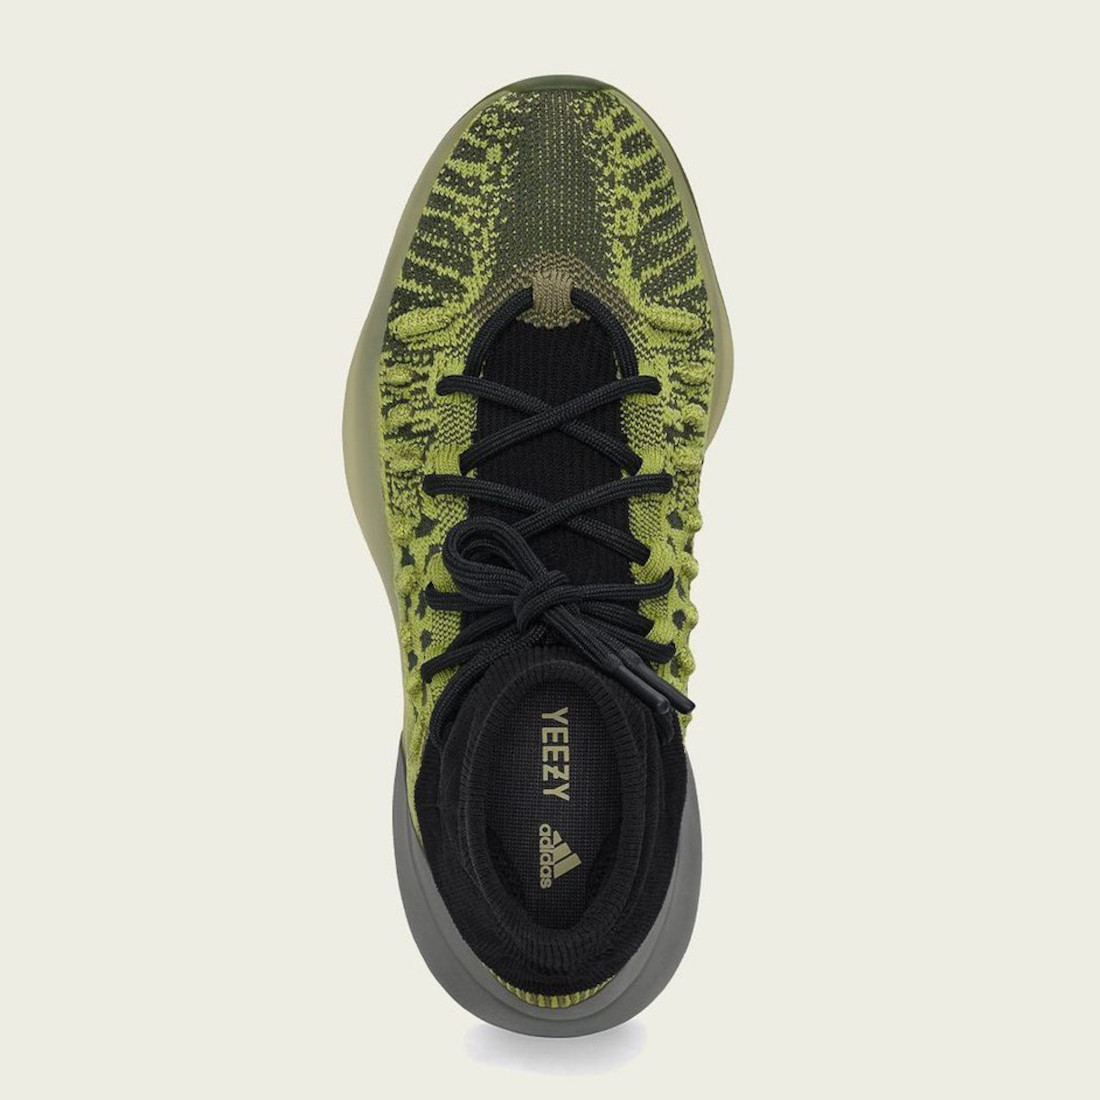 adidas Yeezy BSKTBL Knit Energy Glow HR0811 Release Date